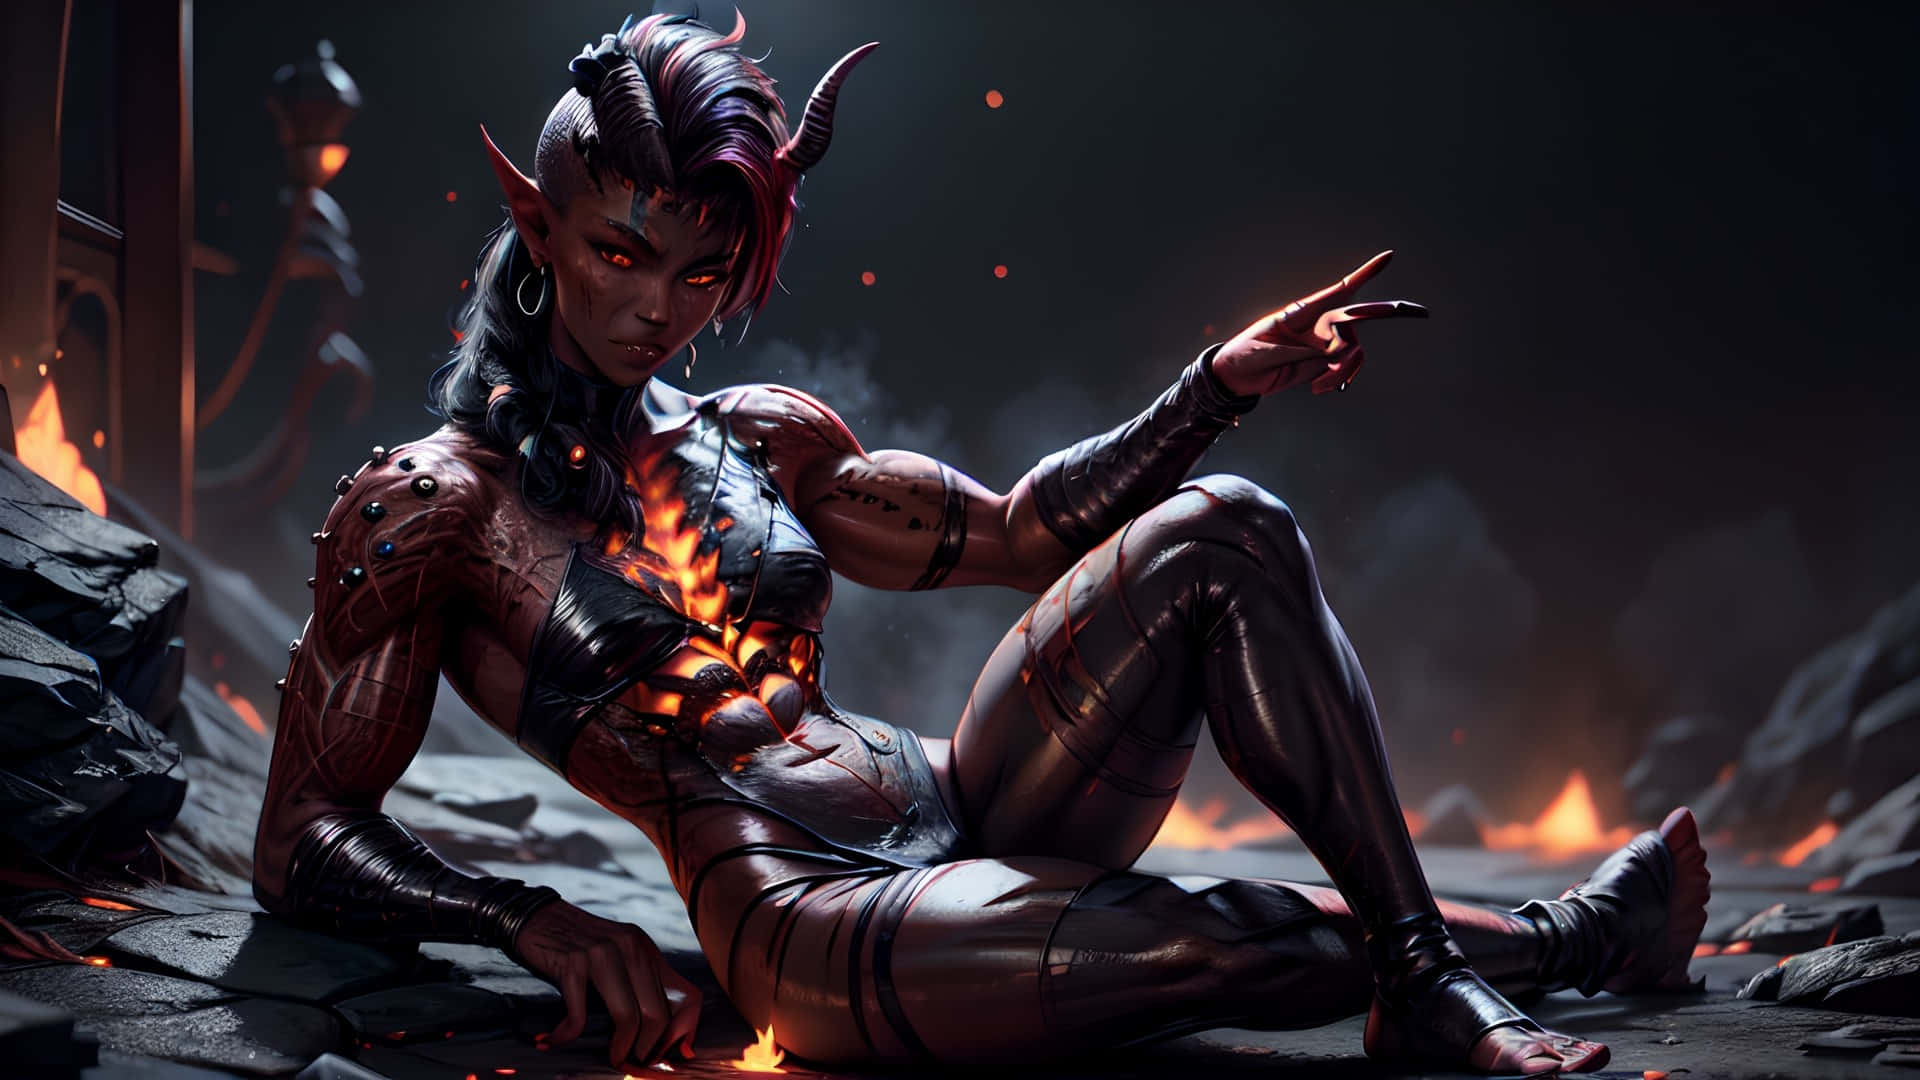 Fiery Demonic Warrior Sitting Artwork Wallpaper